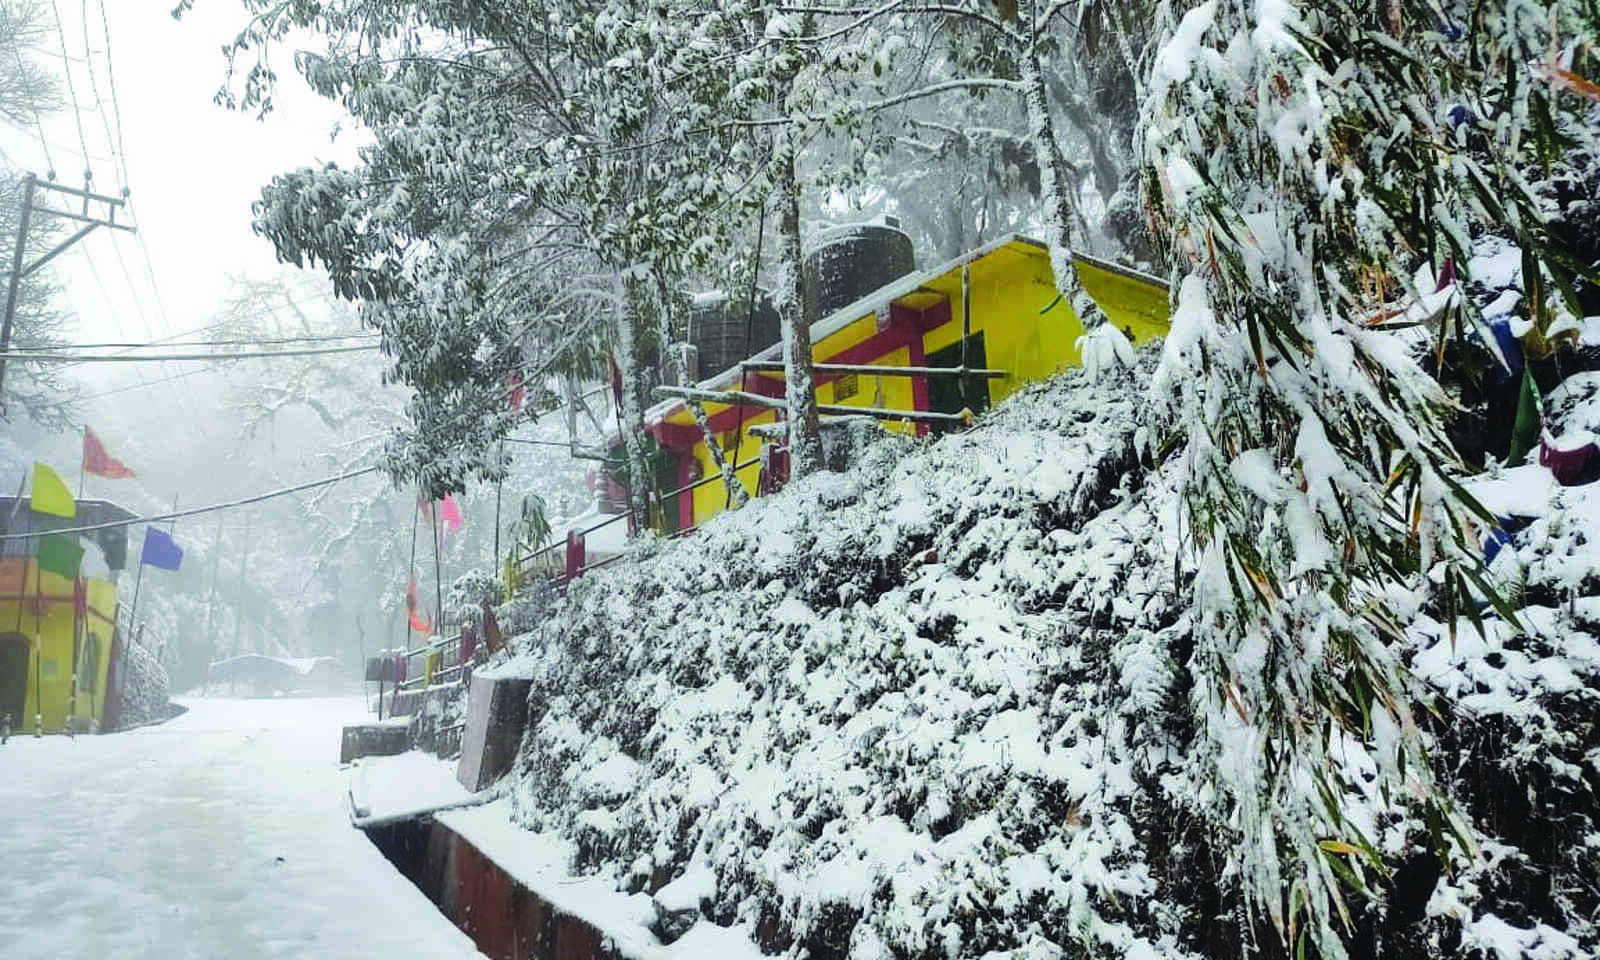 Snowfall in Darjeeling